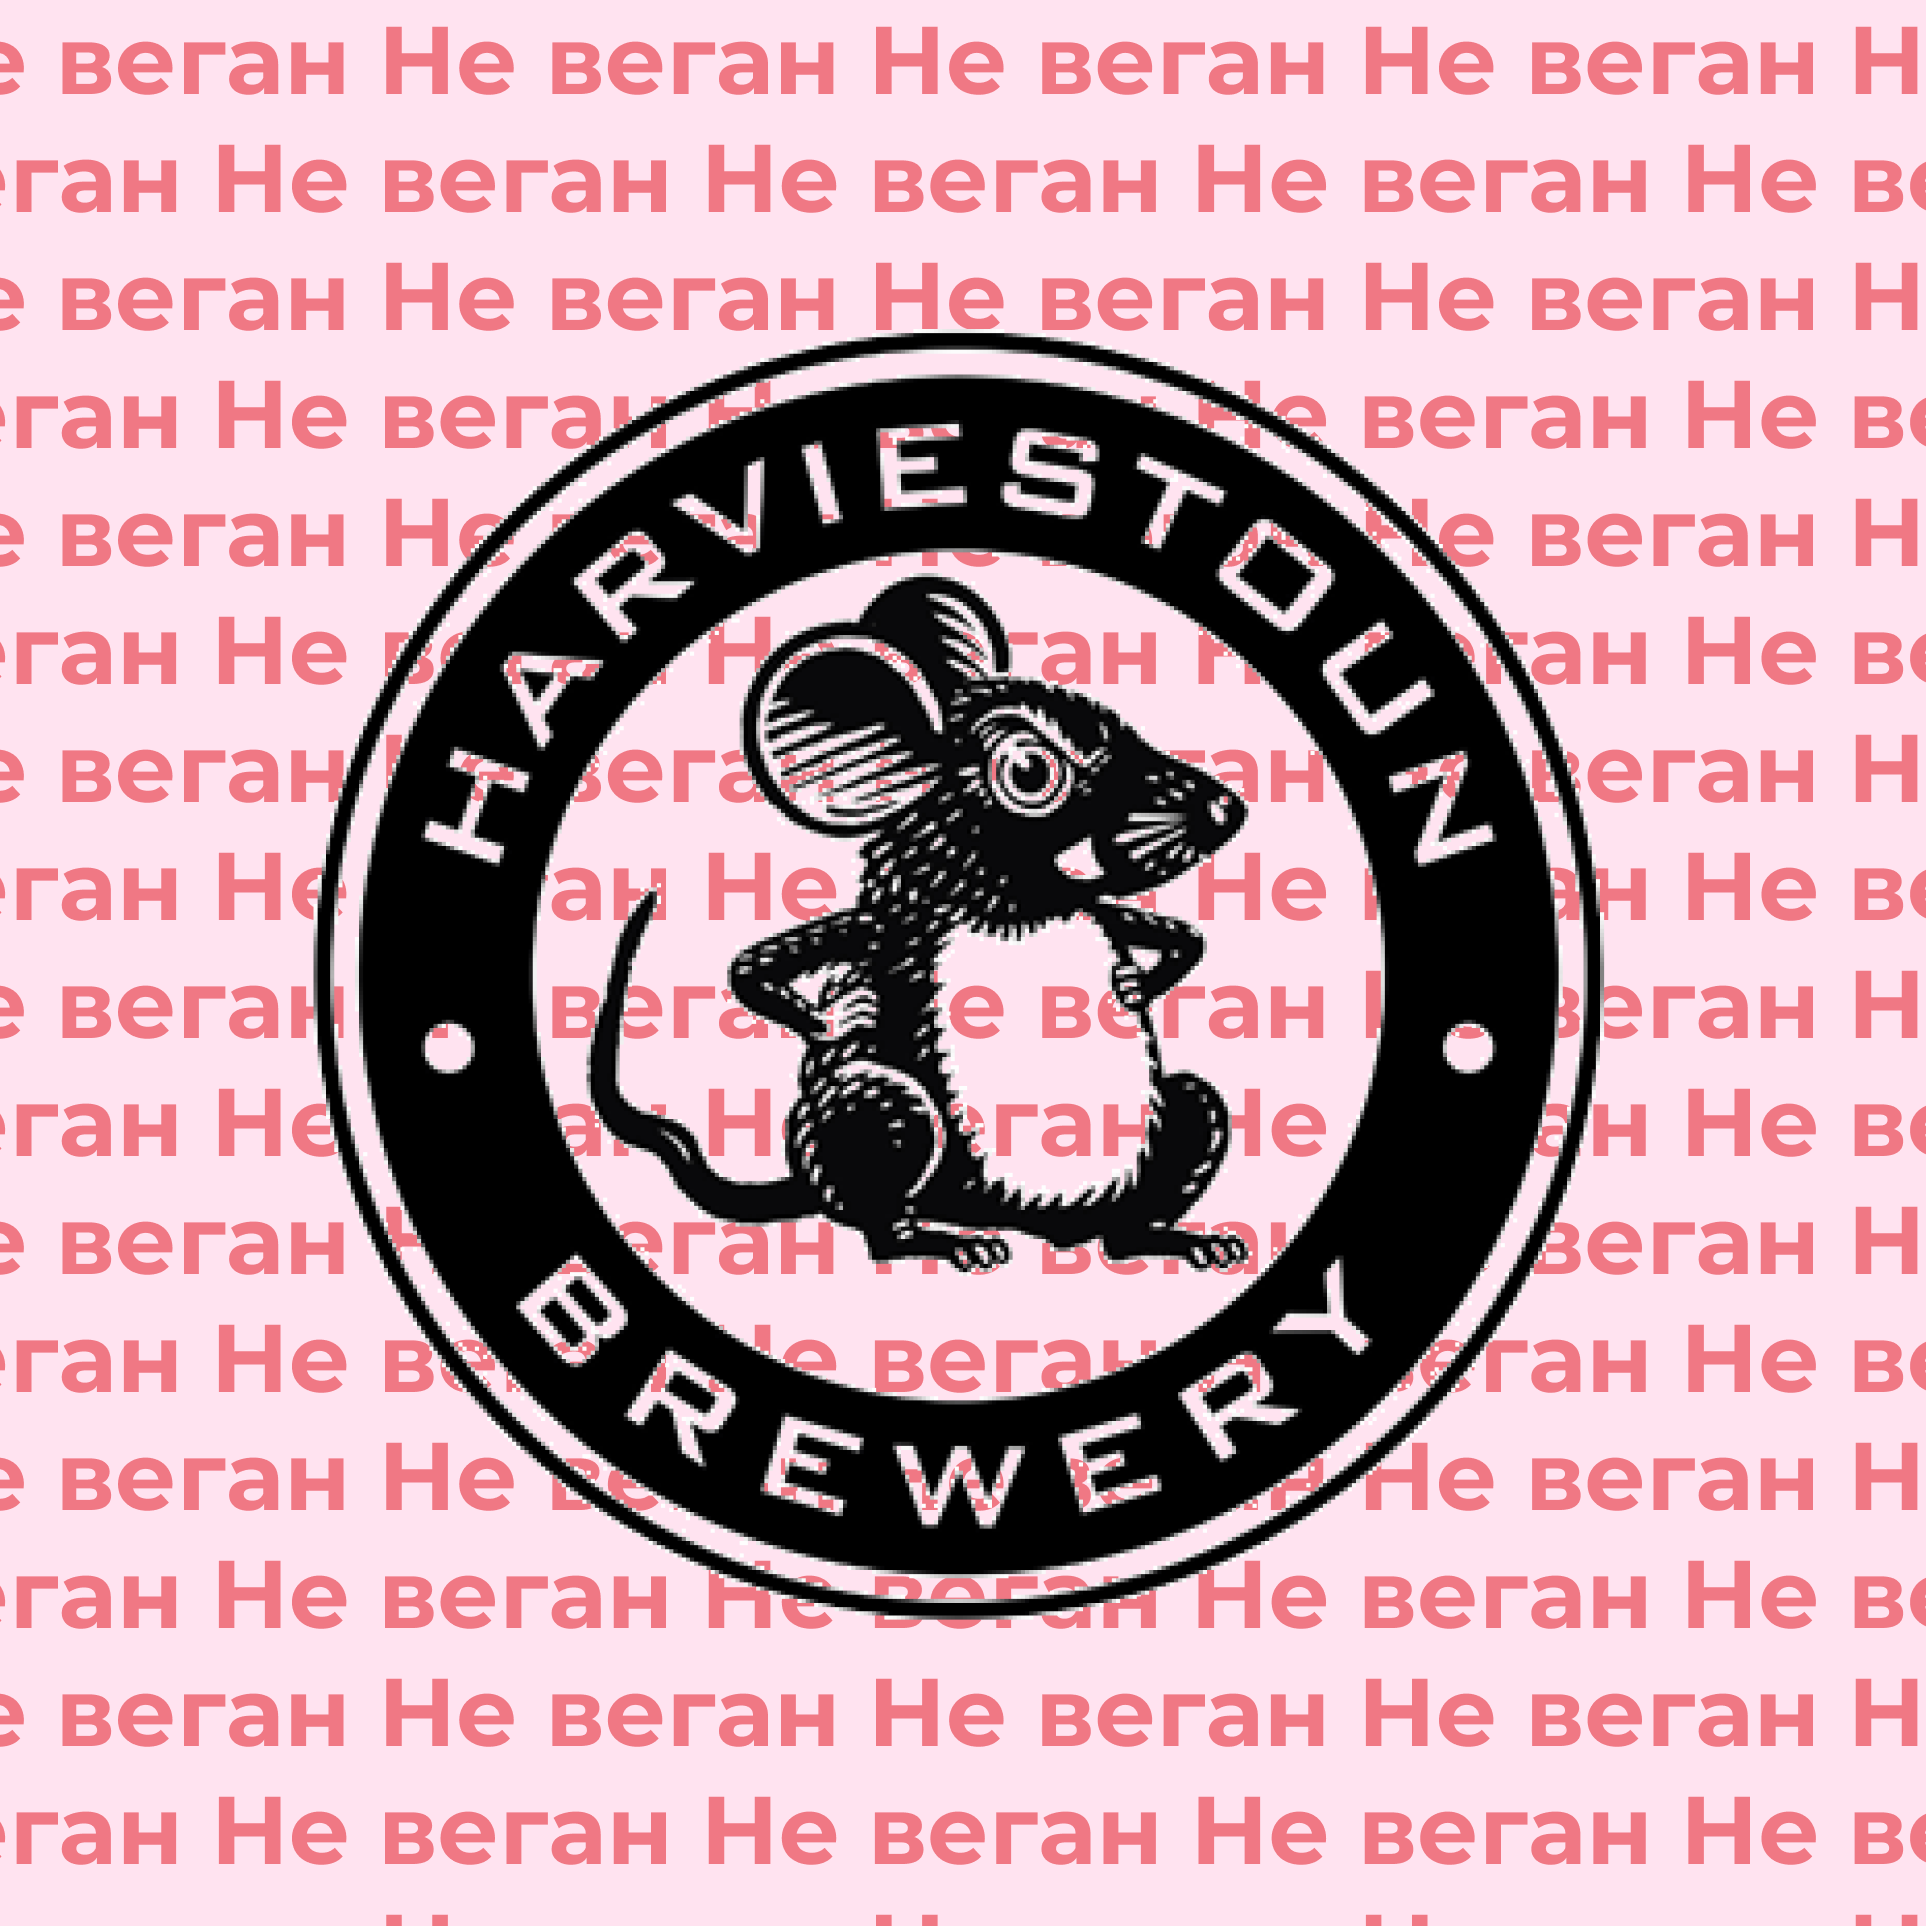 Harviestoun brewery не по вегану